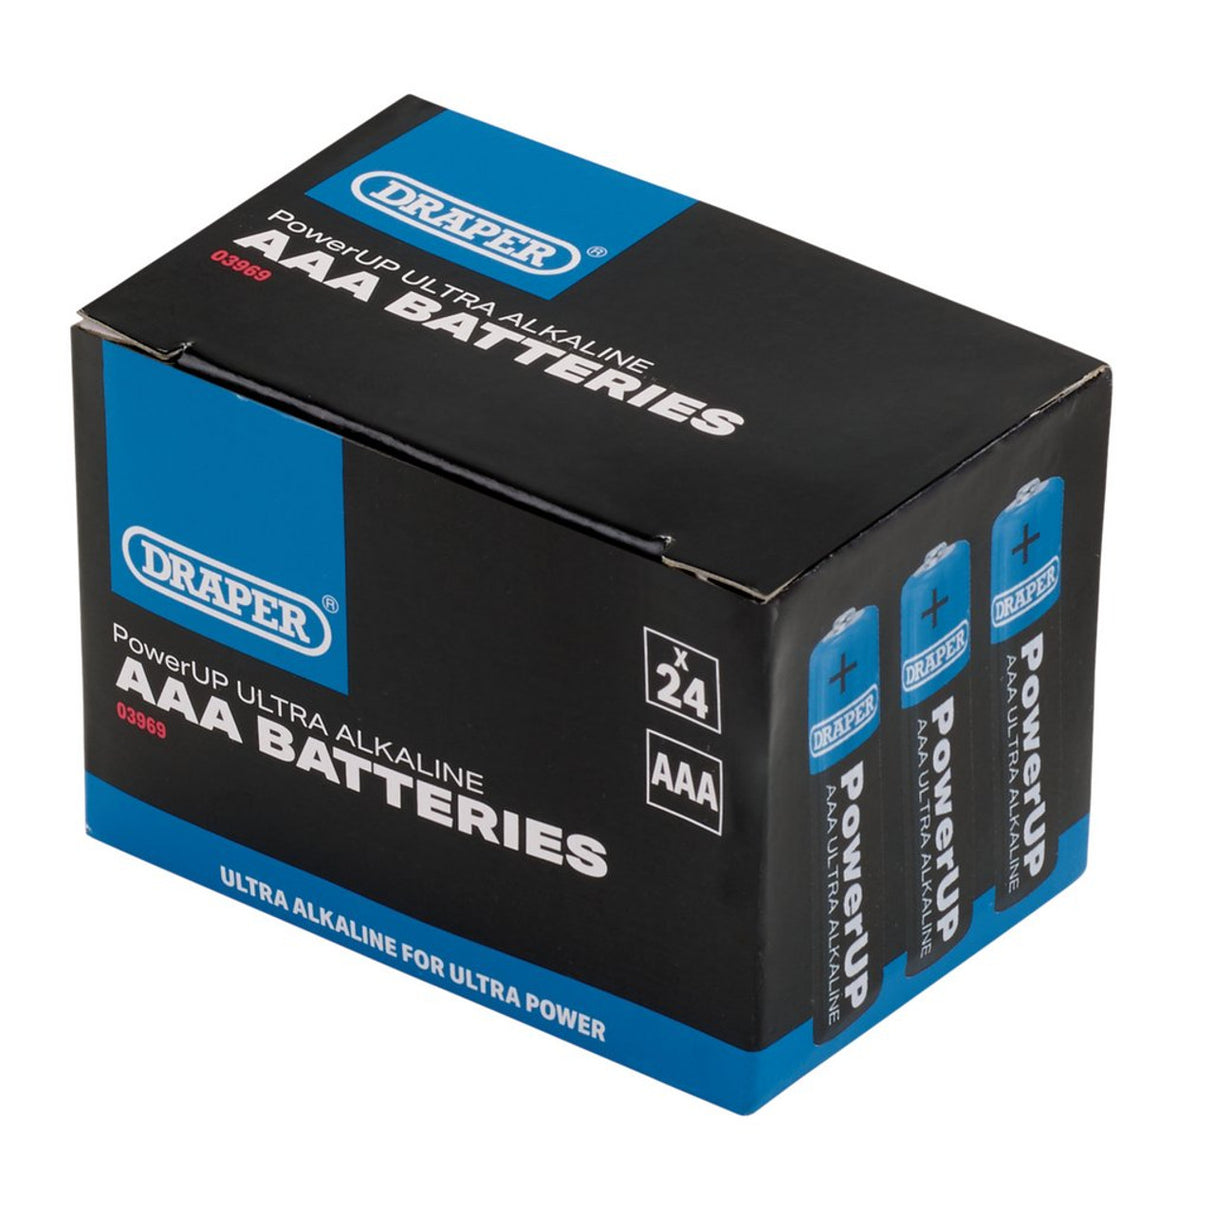 Draper Tools Powerup Ultra Alkaline AAA Batteries (Pack Of 24)